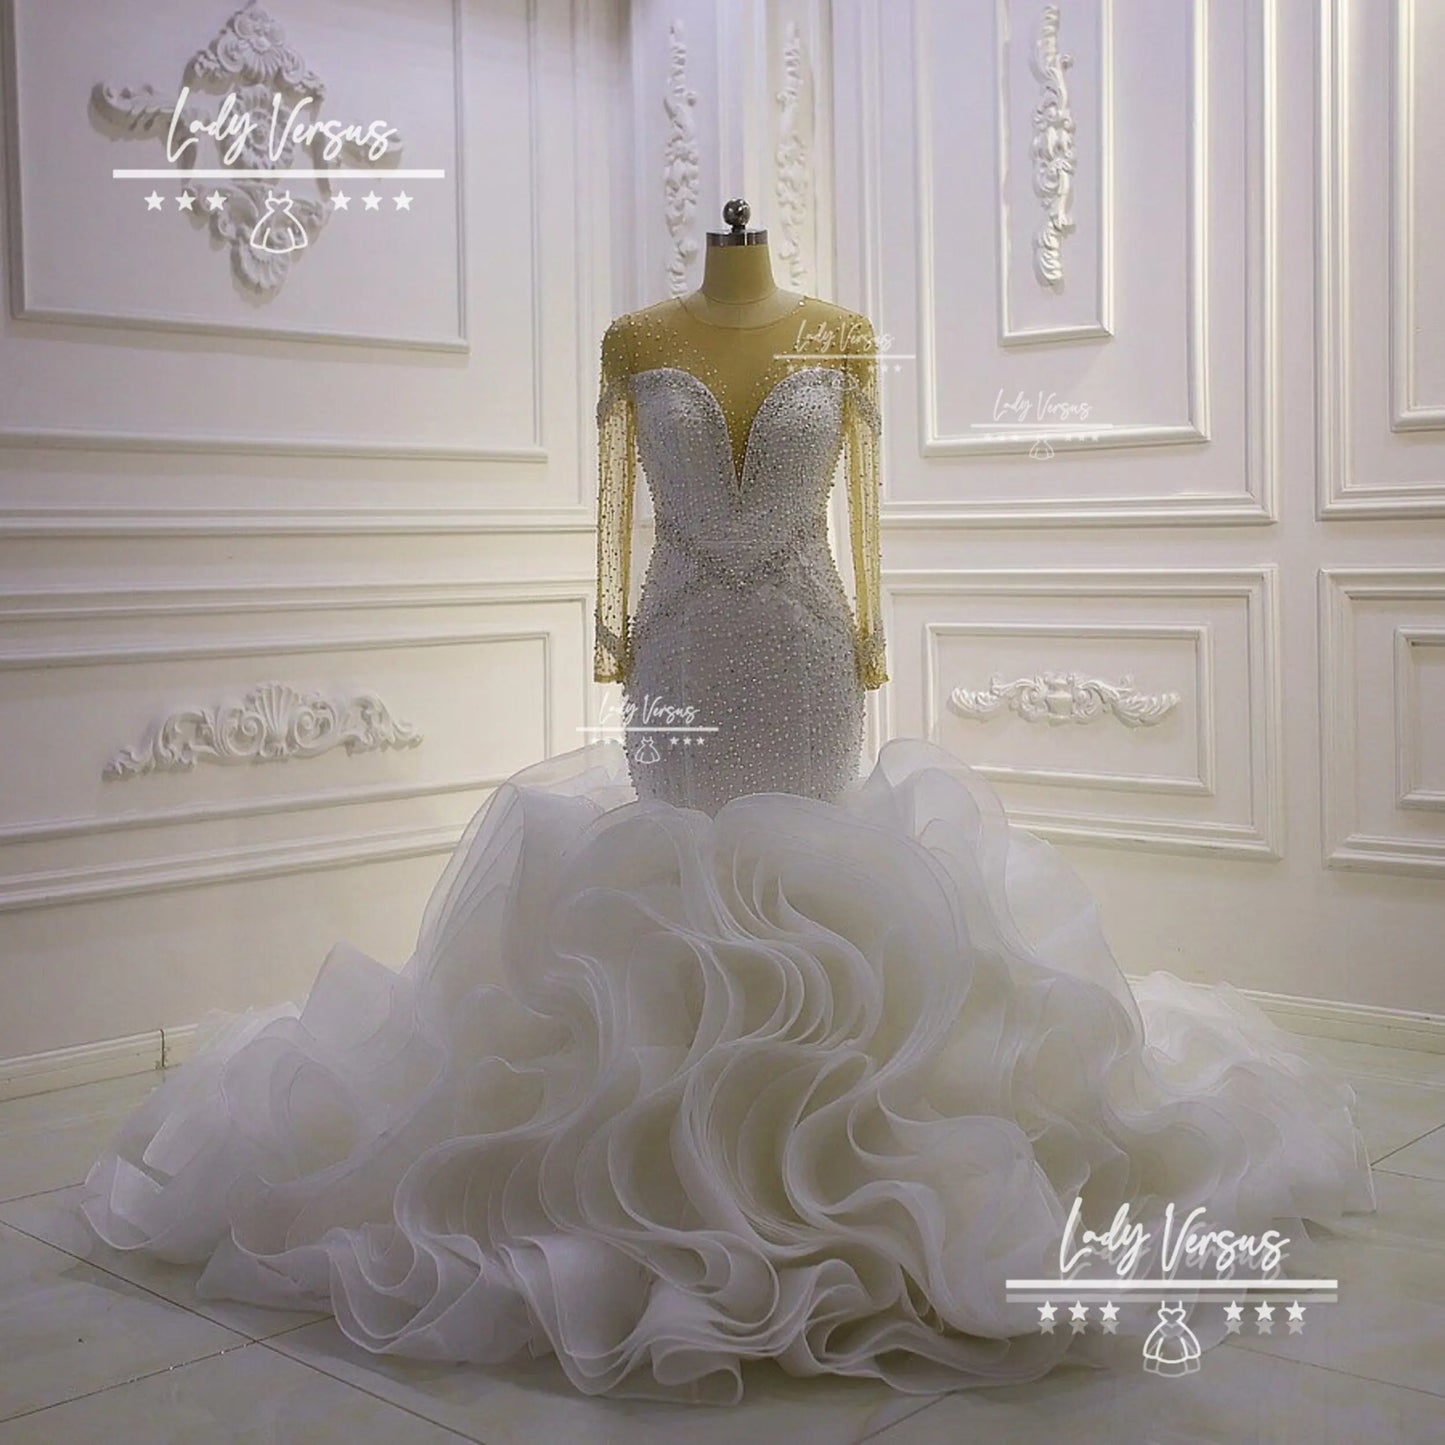 Luxury bridal mermaid style dress/ Extravagant bridal gown/Gorgeous hand beaded bodyce wedding dress/ spaghetti straps-removable Lady Versus